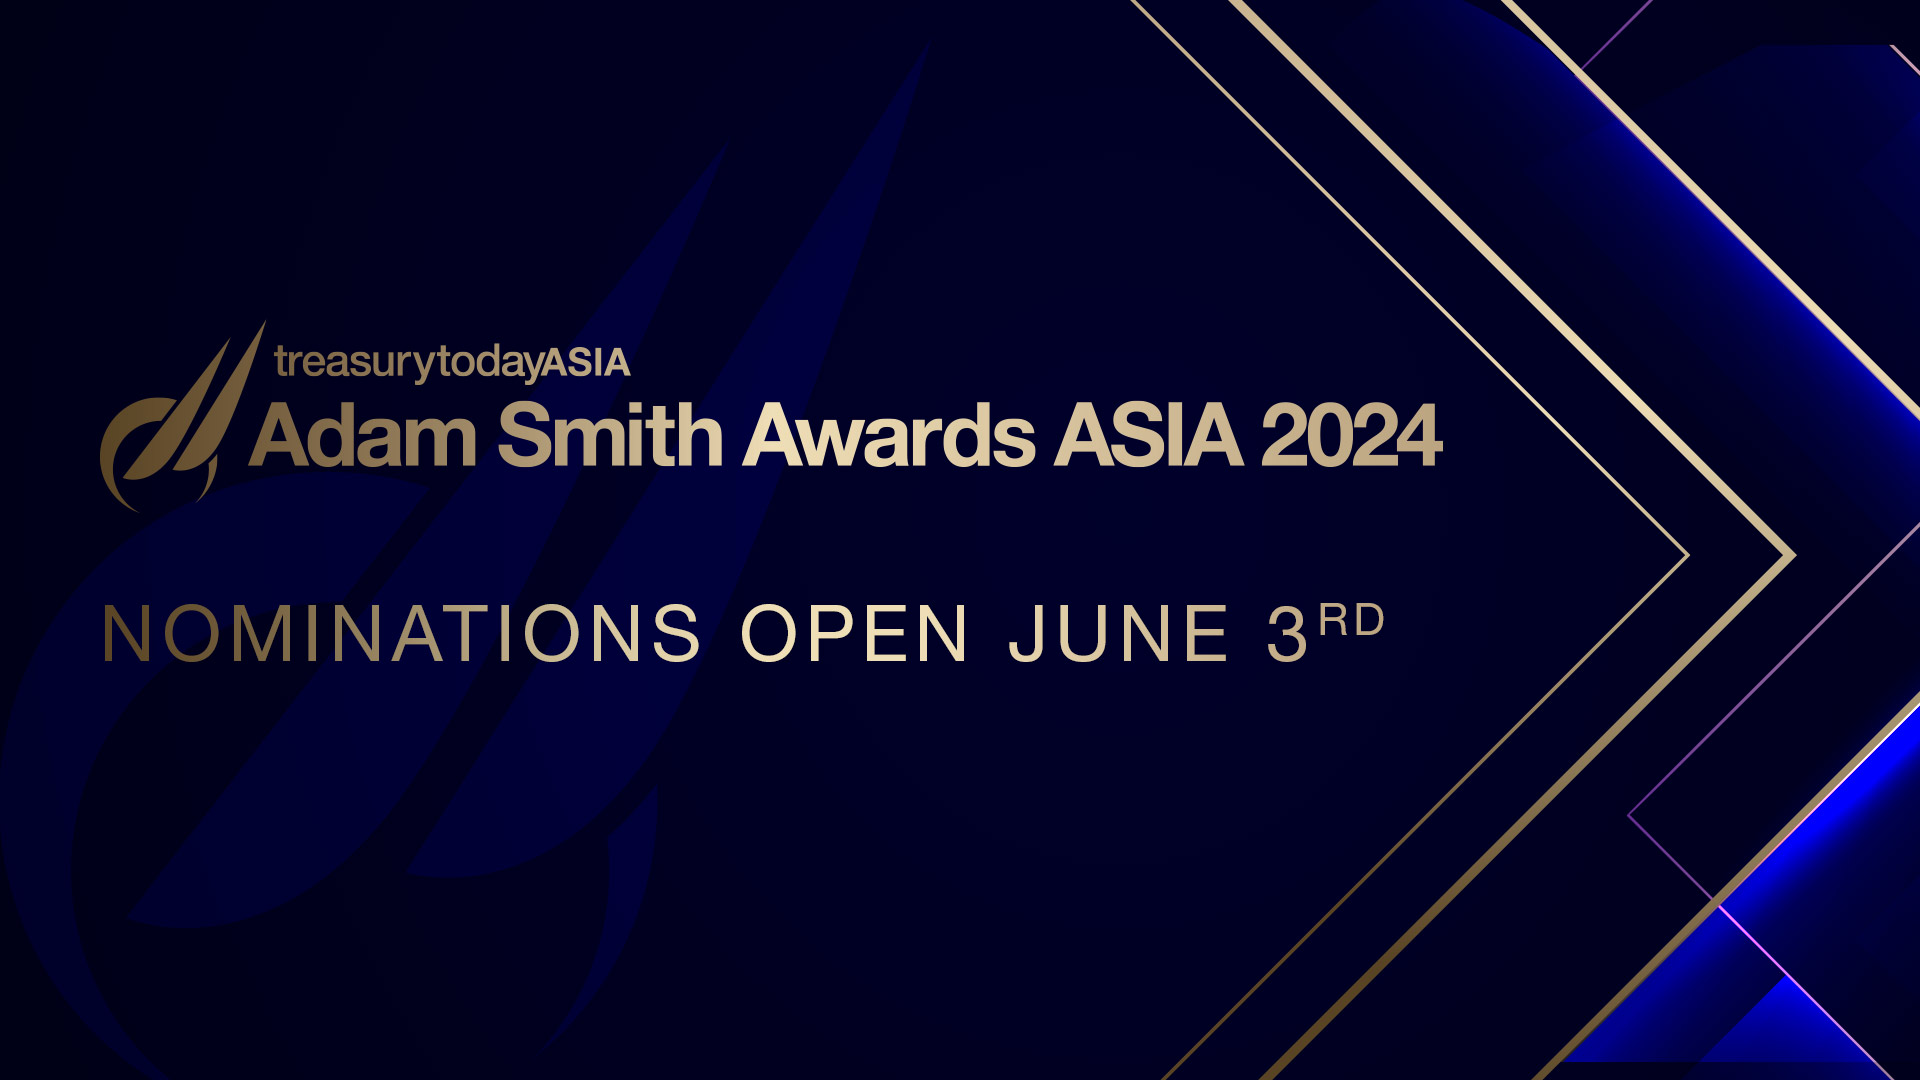 Adam Smith Awards Asia 2024 nominations open June 3rd